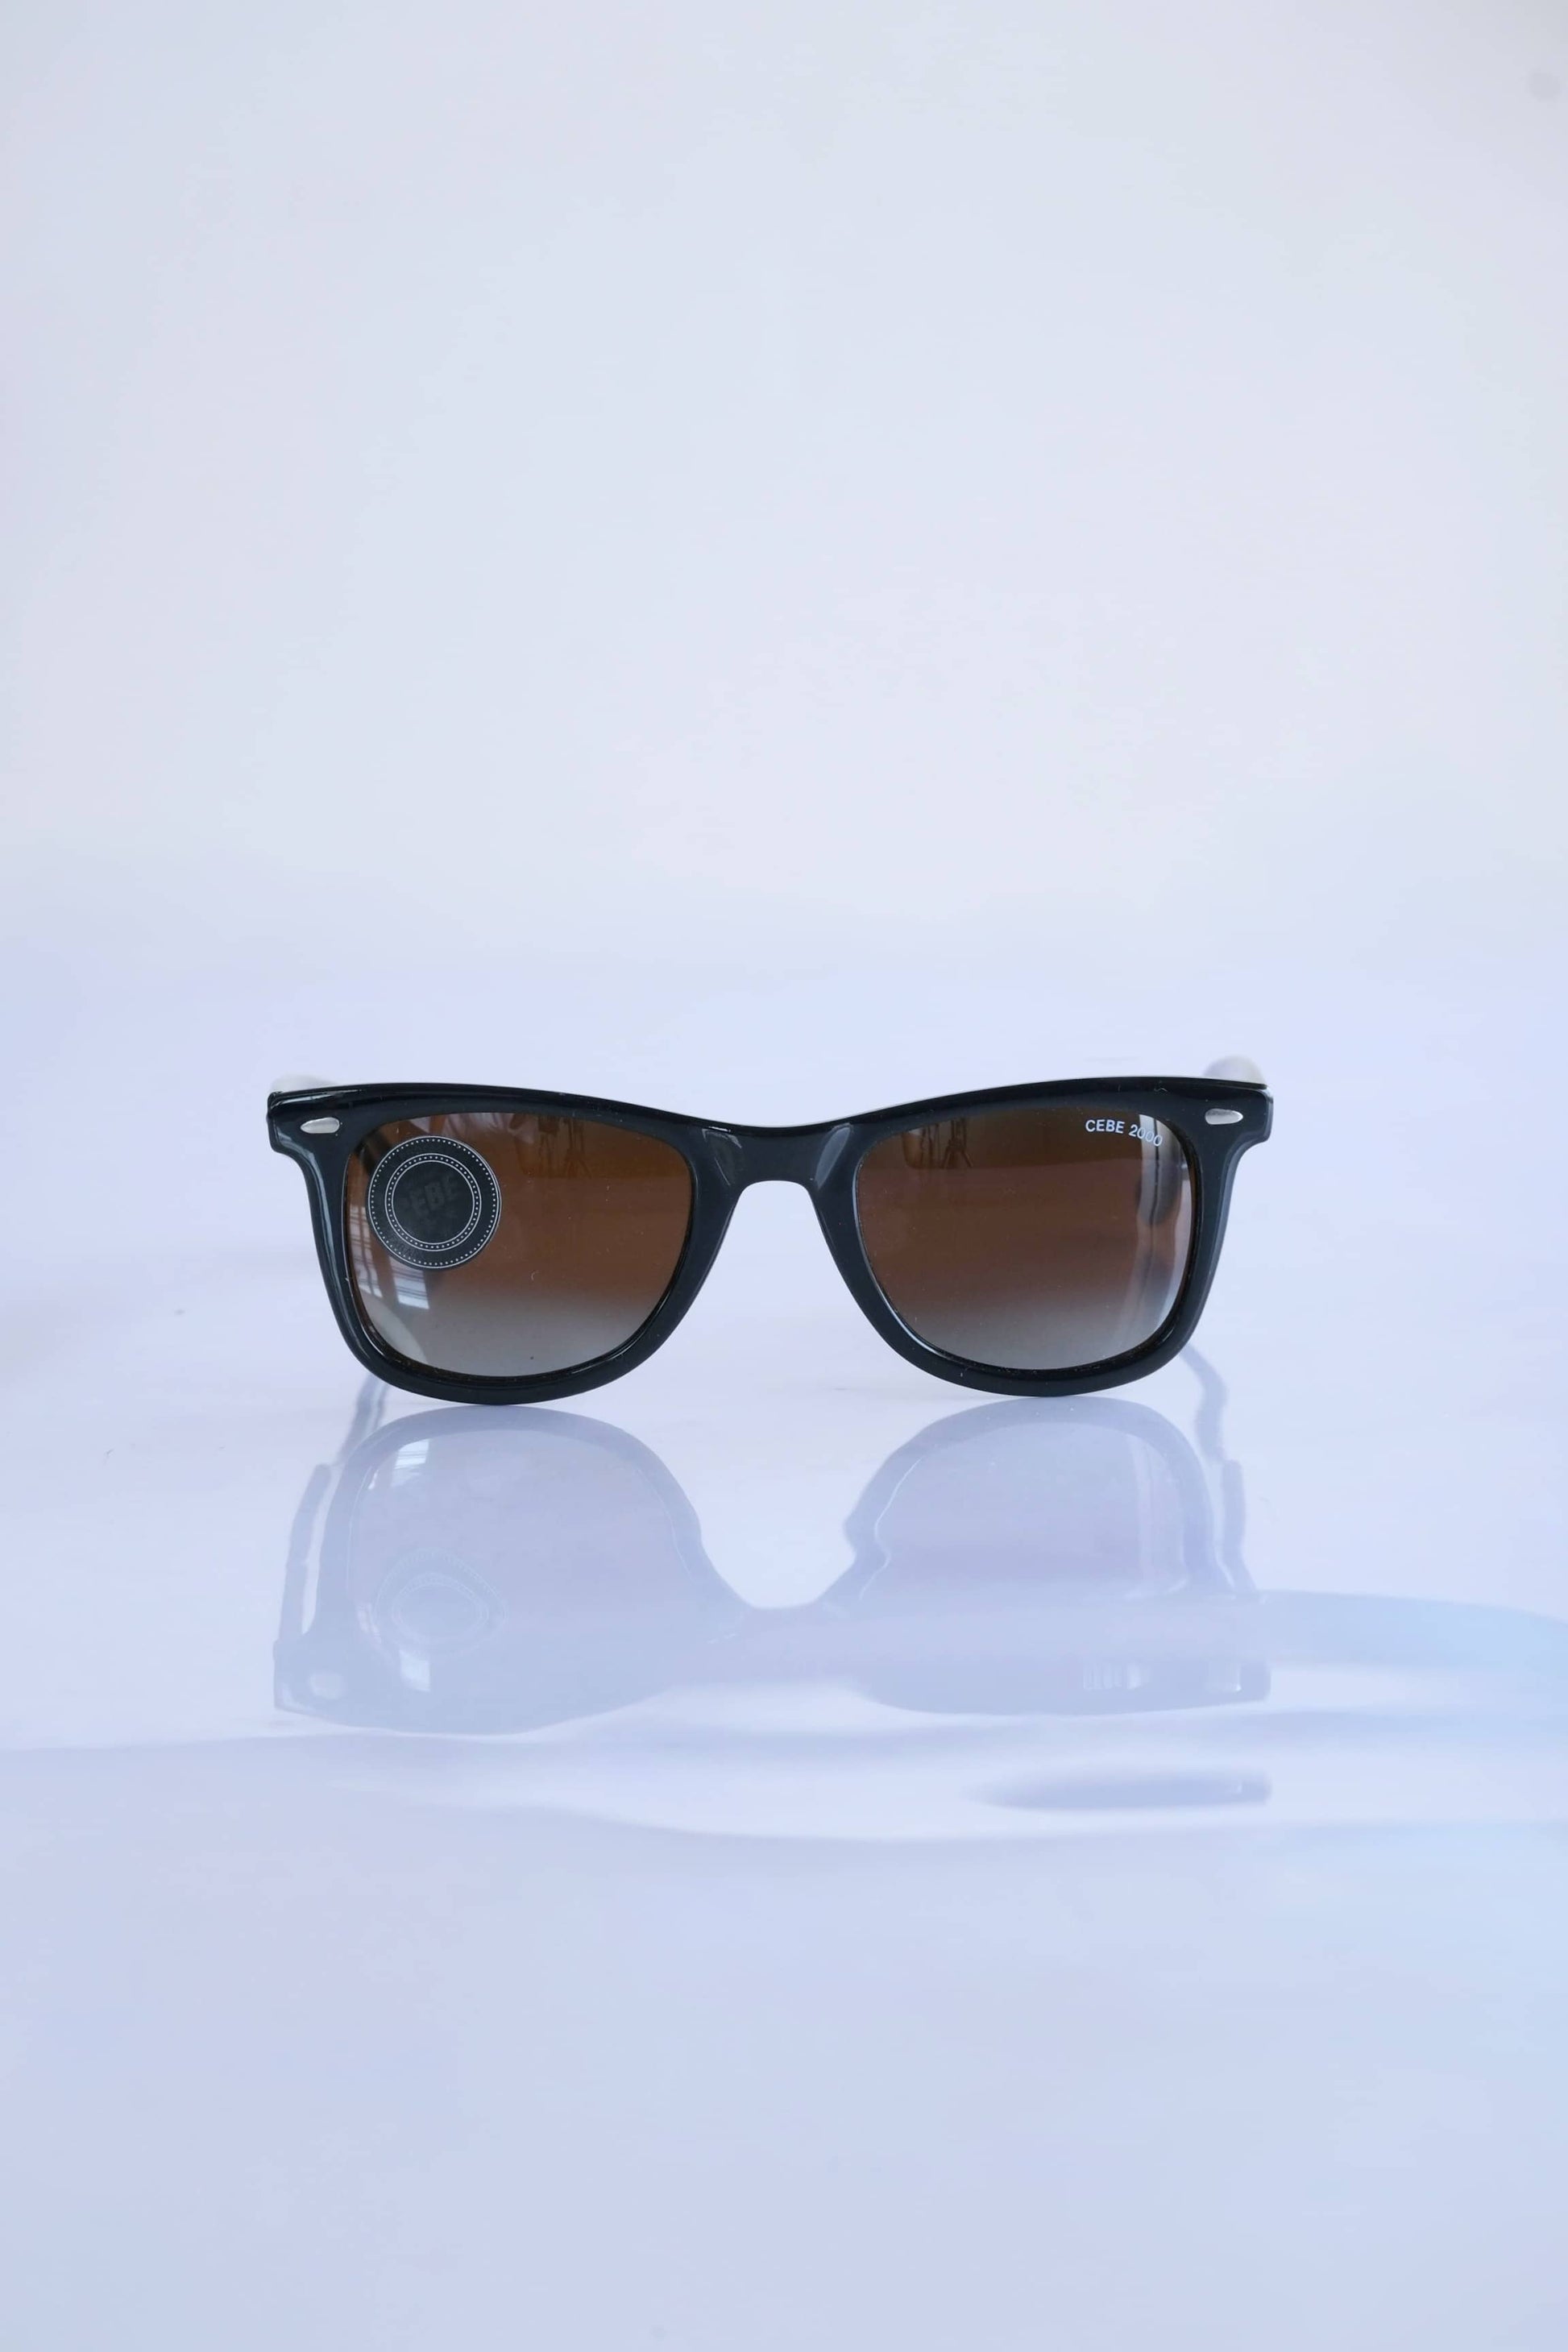 CÉBÉ 90's Wayfarer Mirrored Lens Sunglasses